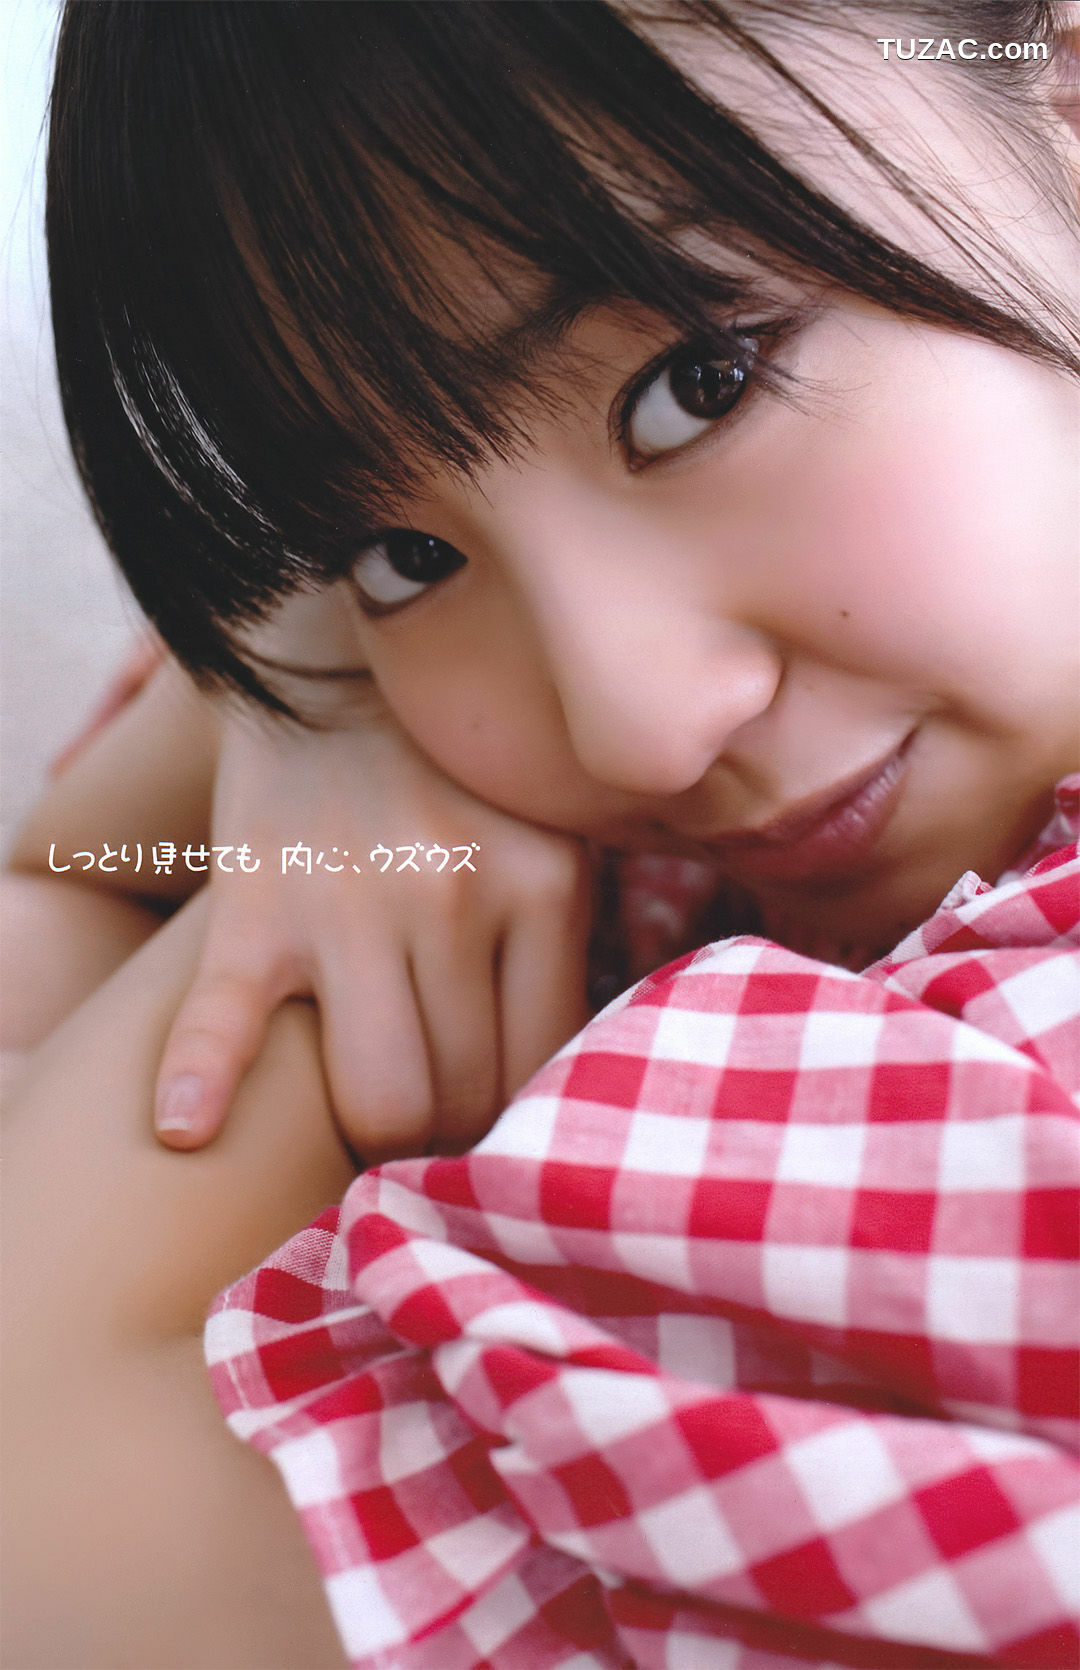 Young Magazine杂志写真_ 小嶋陽菜 Haruna Kojima 2011年No.16 写真杂志[18P]